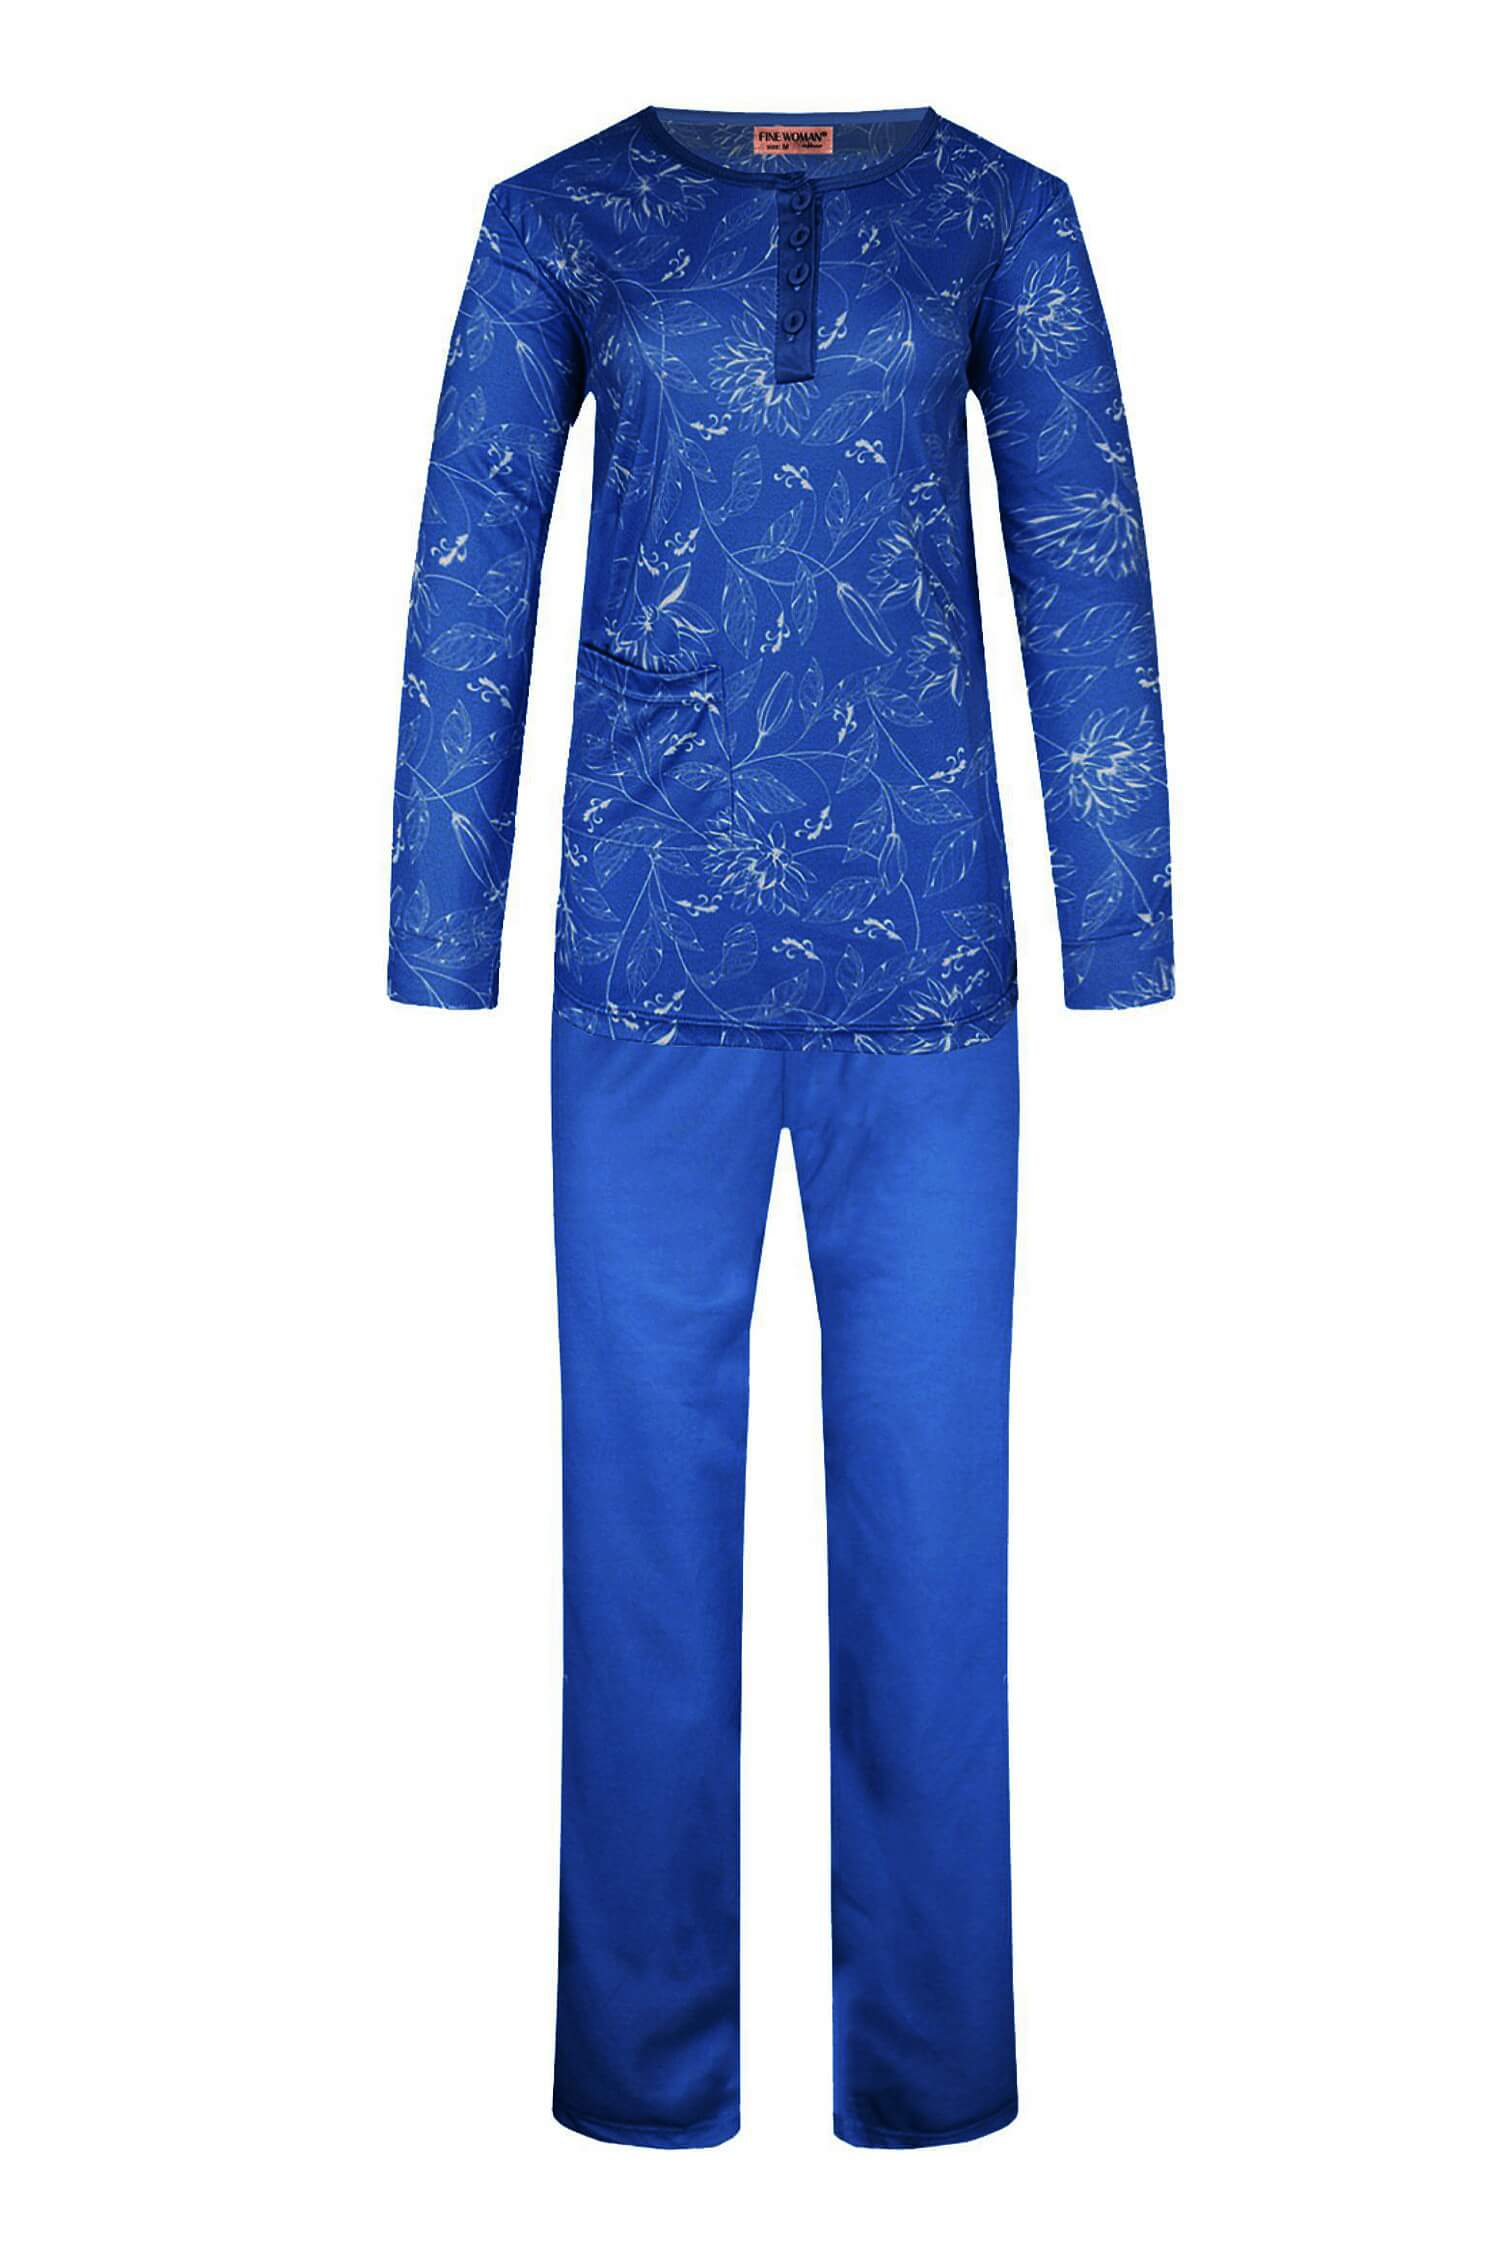 Sára dámské pyžamo dlouhý rukáv 2299 3XL tmavě modrá